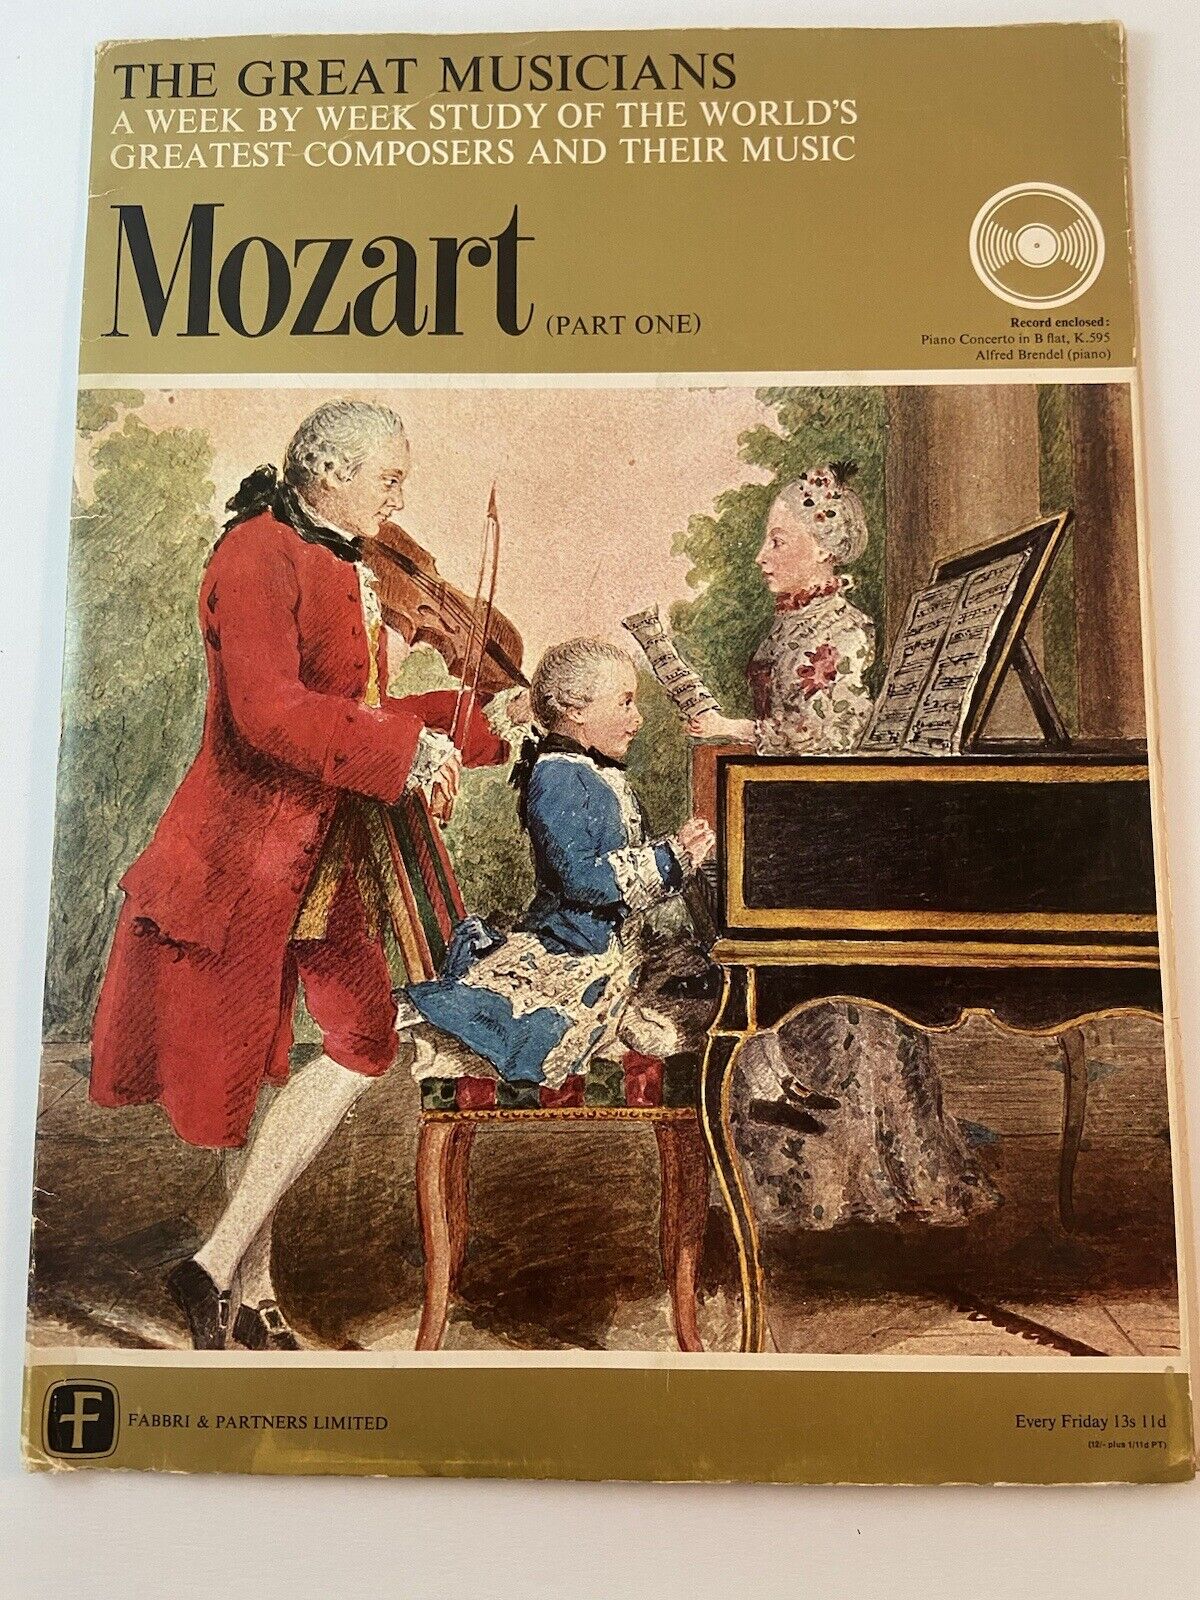 Vtg Mozart-The Great Musicians No. 2-Study-Vinyl LP-Part One-1960s-Composers